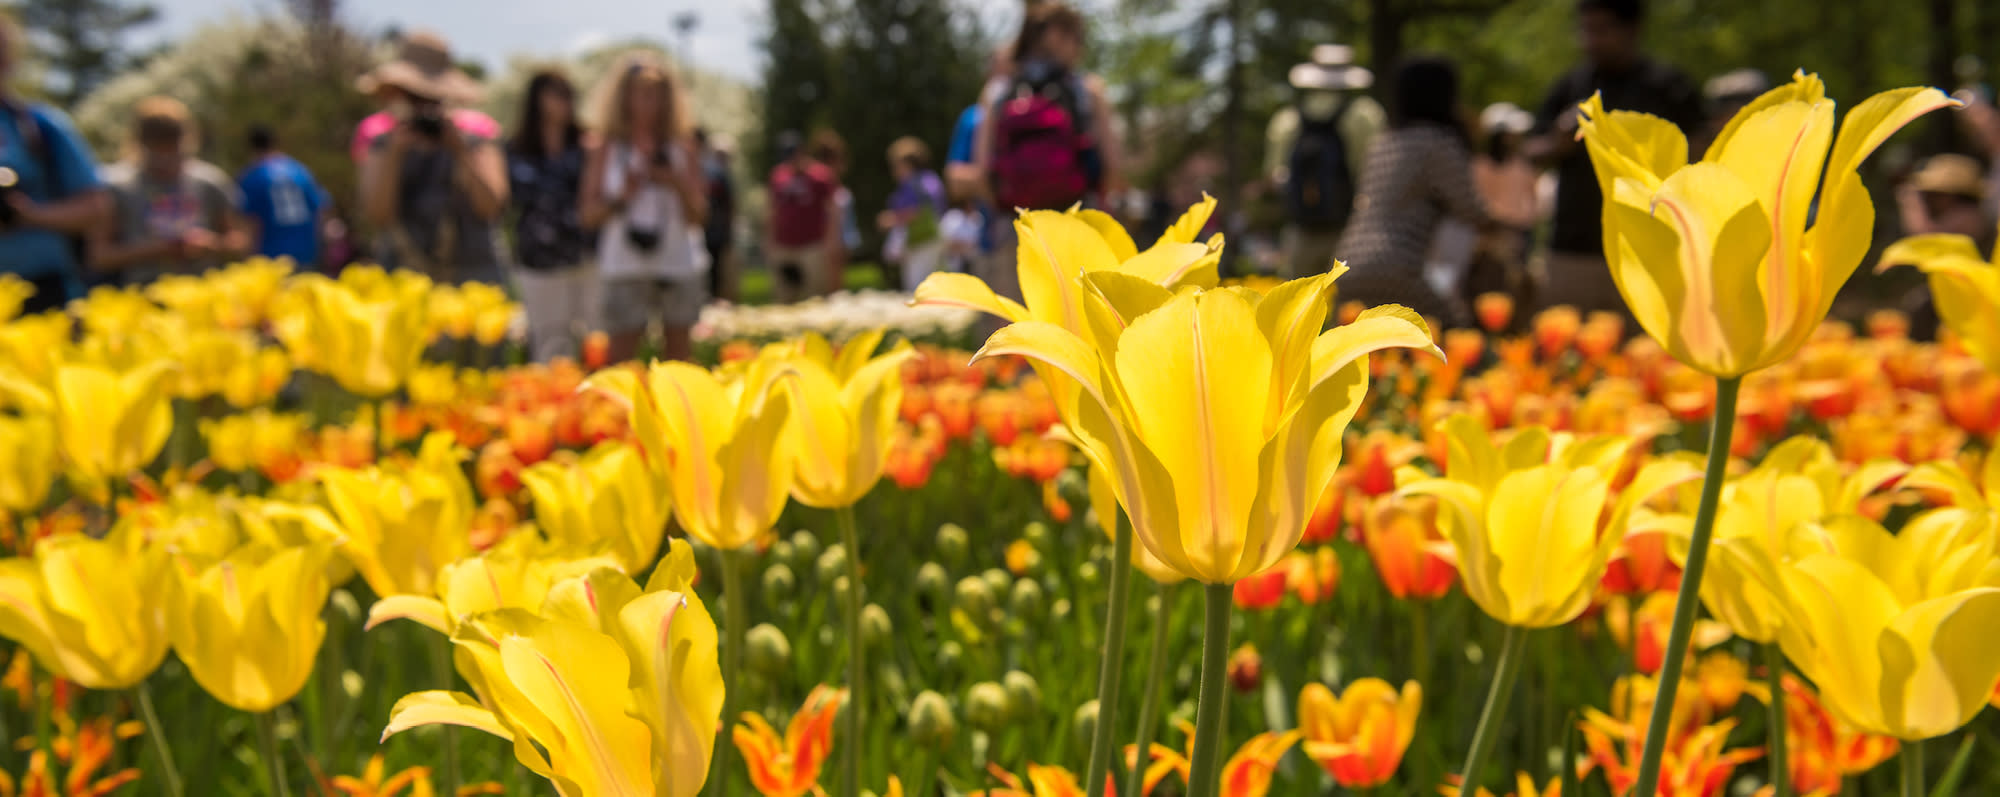 Albany Tulip Fest in Washington Park